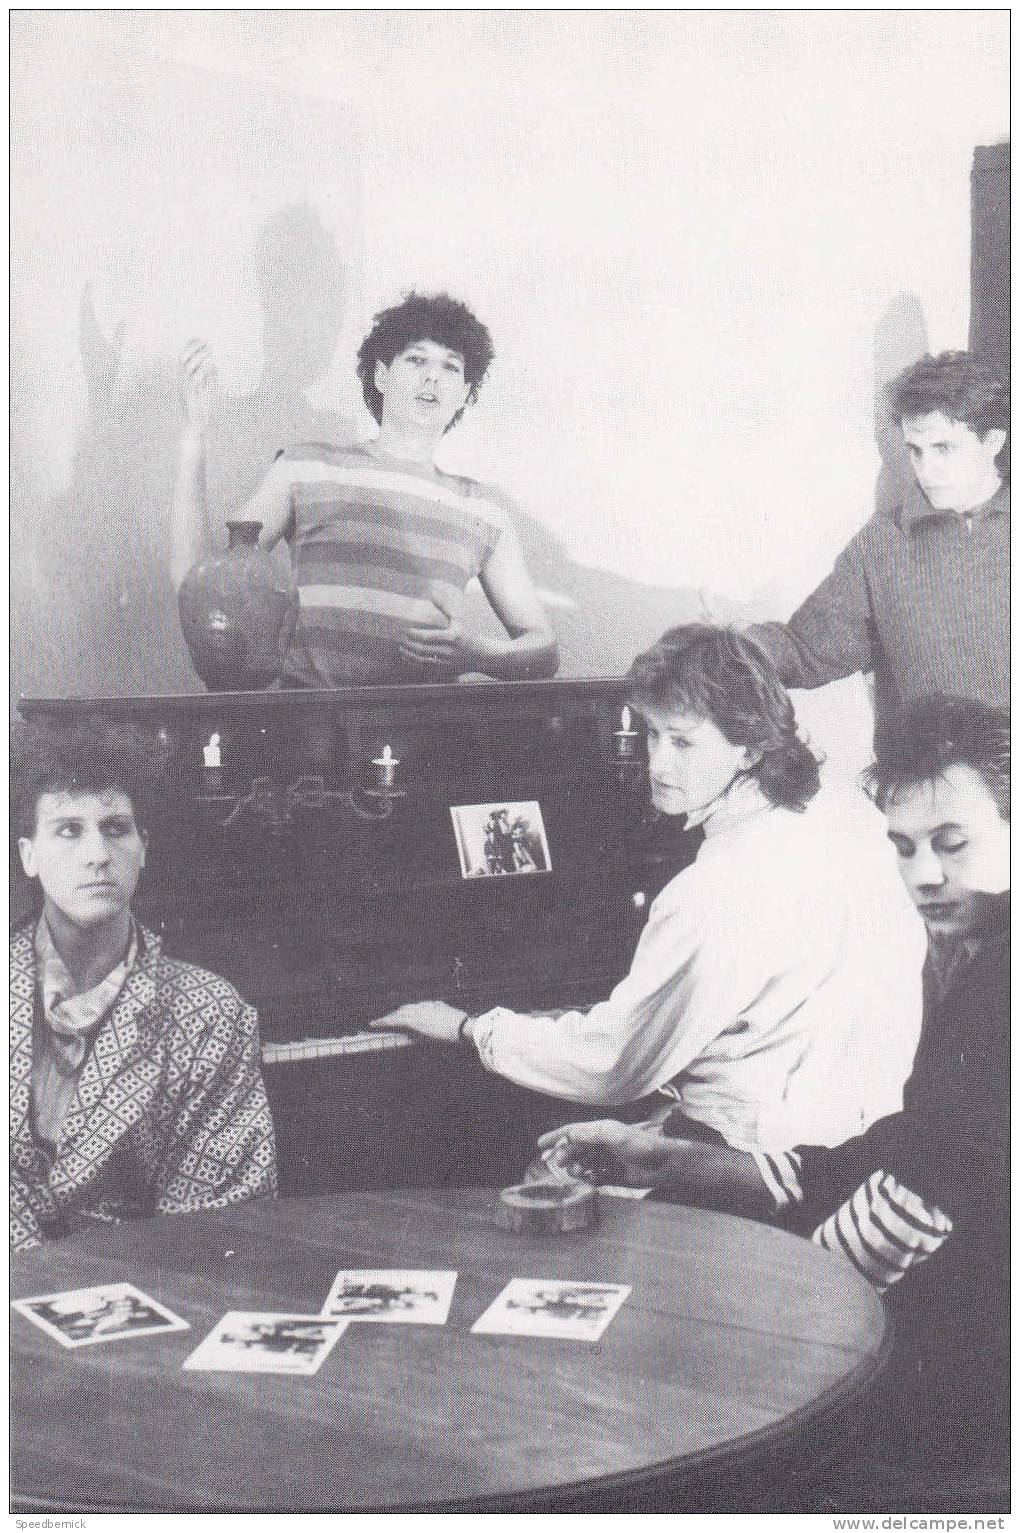 17047 Rennes (35 F) Groupe Musique Rock - Evening Legions- CP Radio Savane 1983- Photo Cloarec-Daligault - Rennes